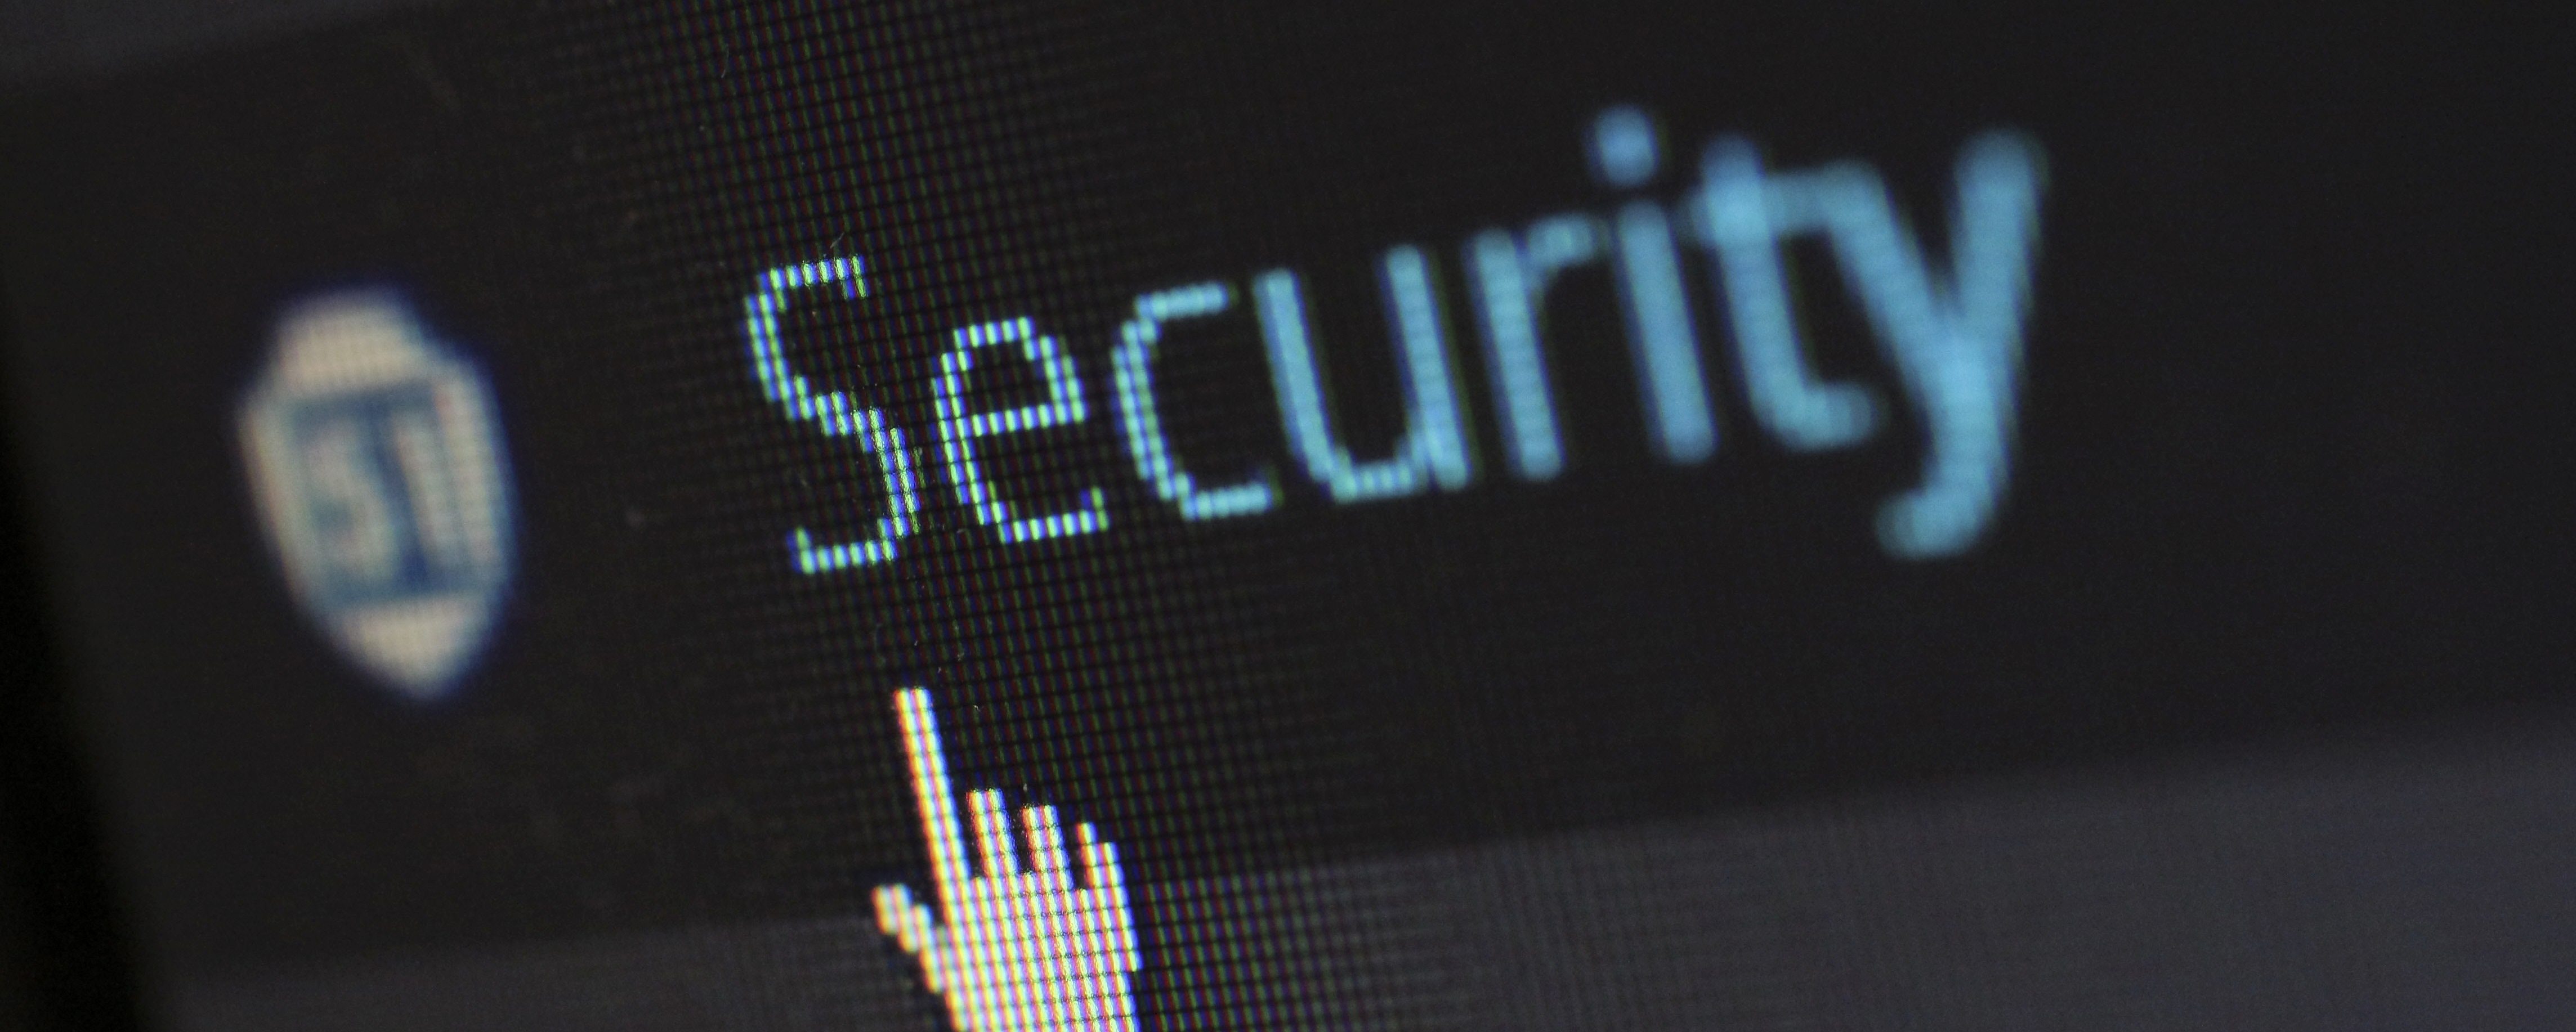 Cybersecurity Risk Alerts: ERAI adds new alert type